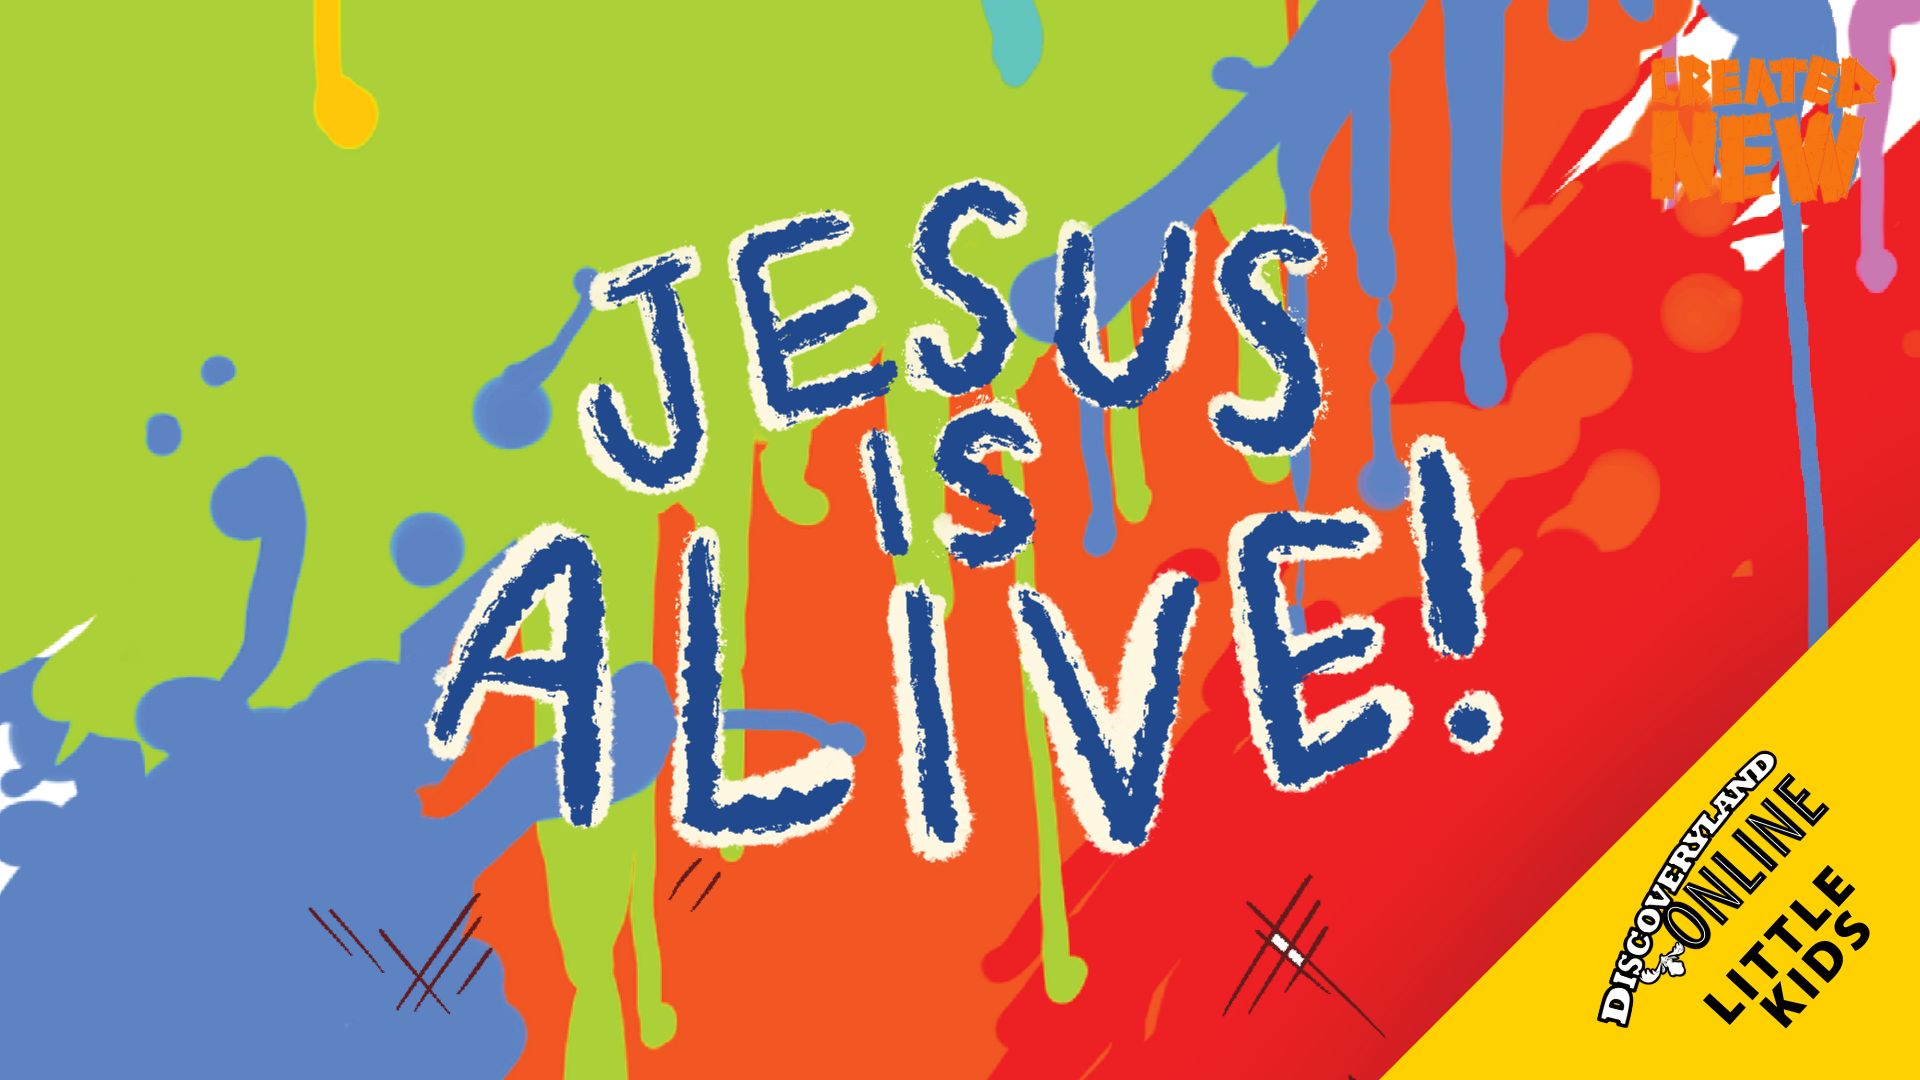 Jesus Is Alive!